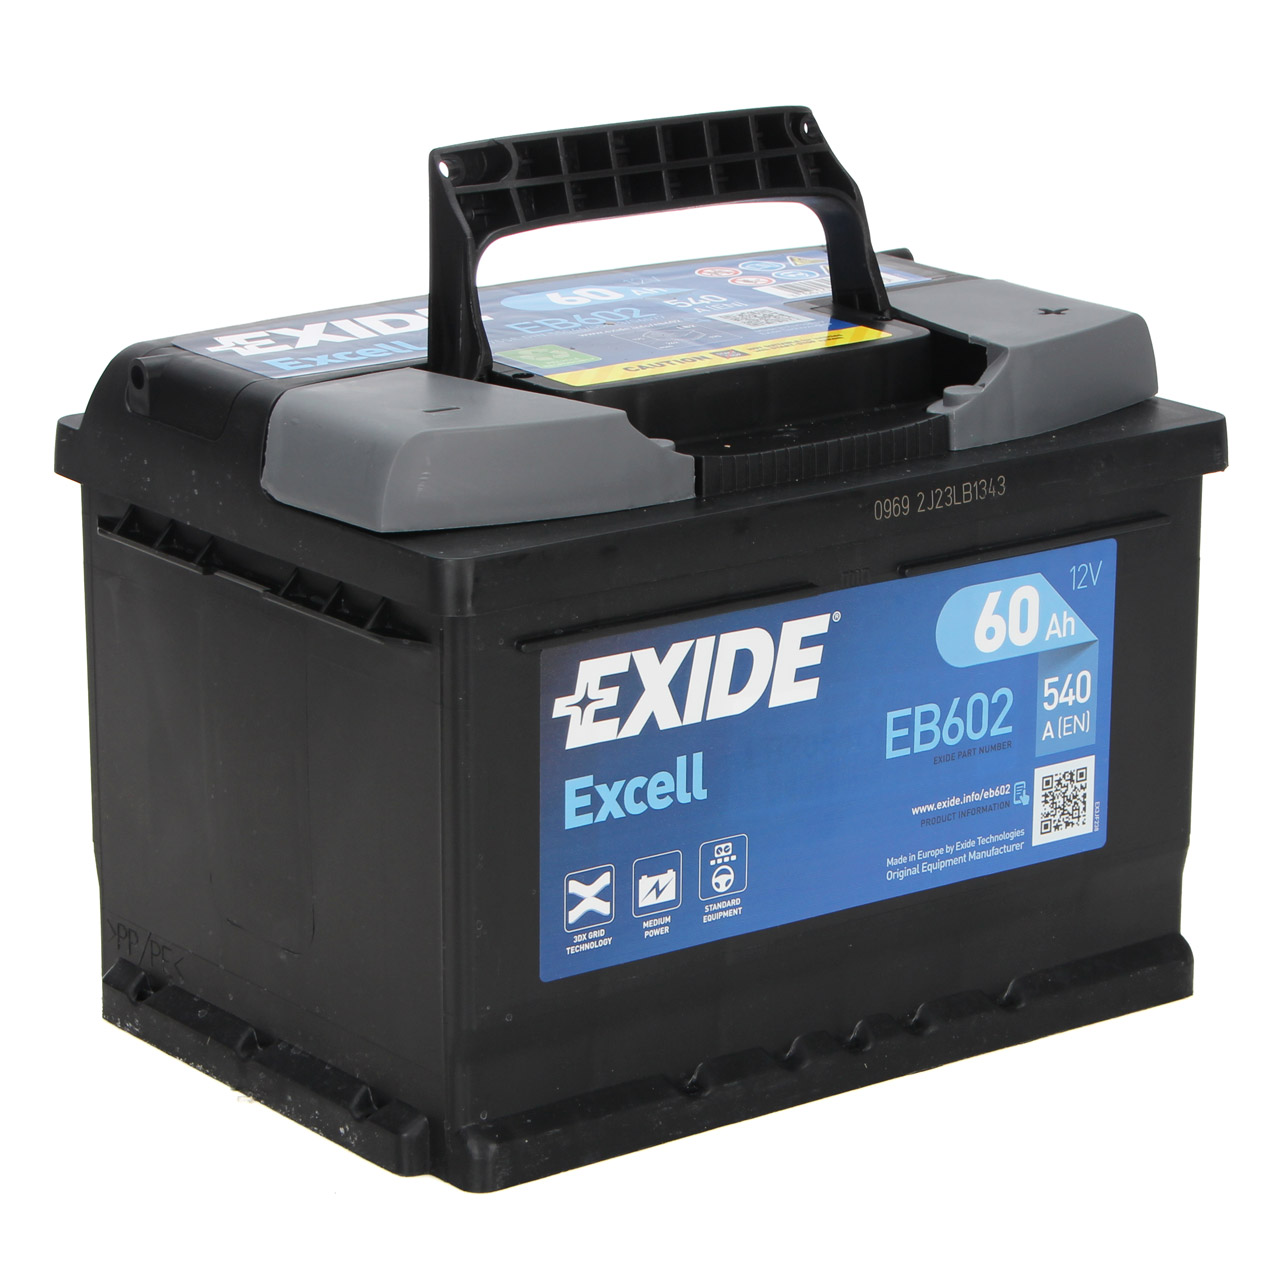 EXIDE EB602 EXCELL Autobatterie Batterie Starterbatterie 12V 60Ah